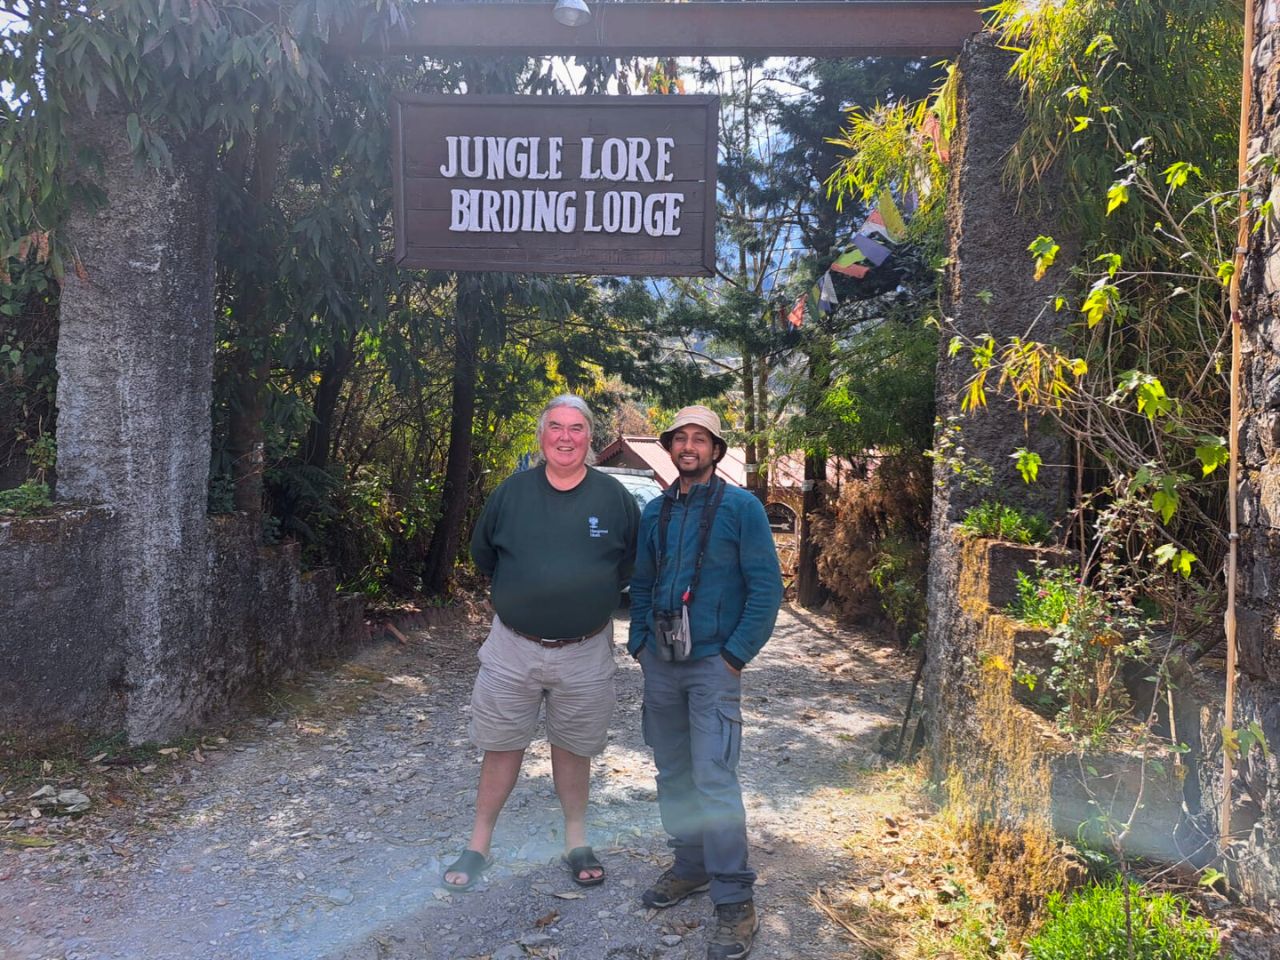 Jungle Lore Birding Lodge